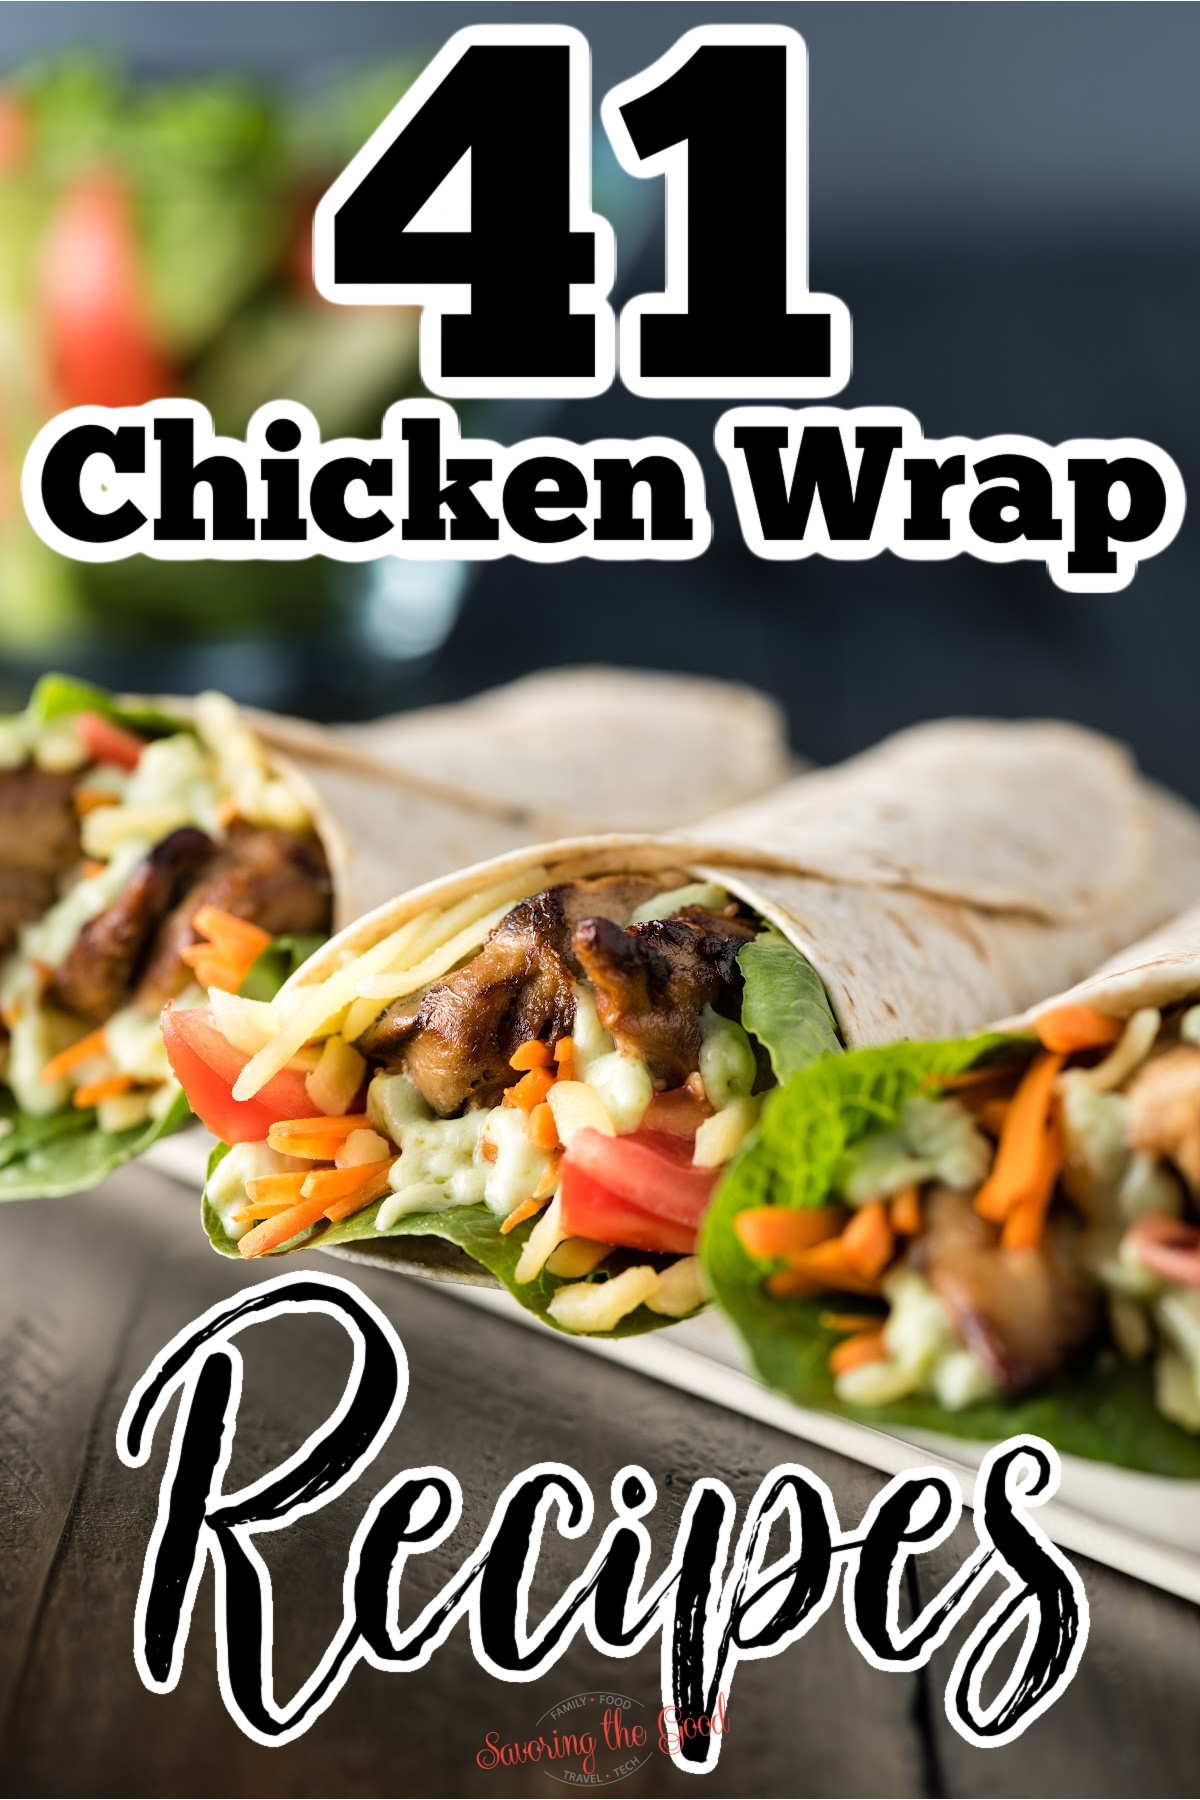 41 chicken wrap recipes.